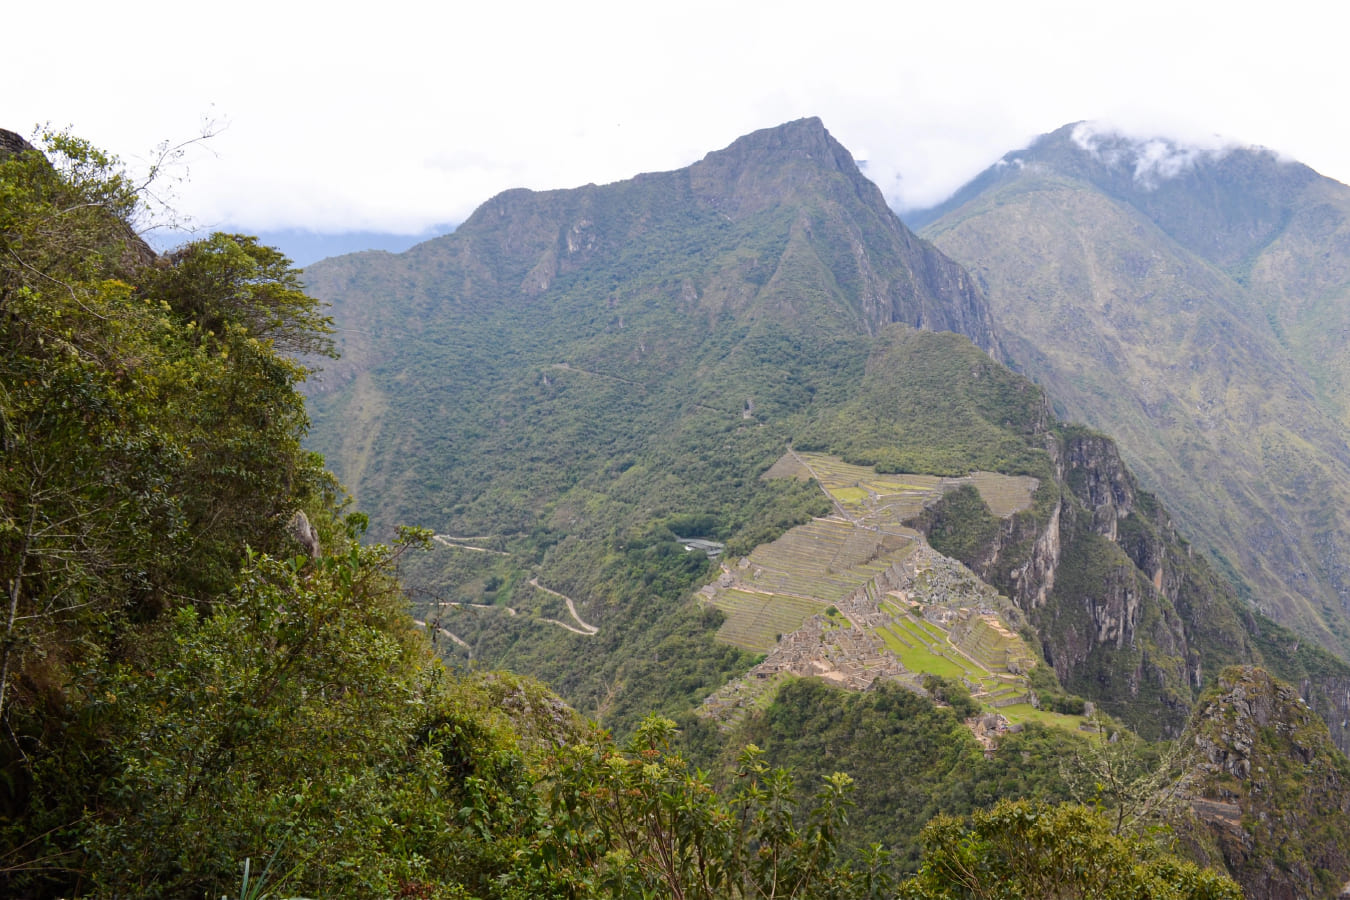 View of the Inca citadel from the summit of Machu Picchu Mountain. Sources: CuscoPeru.com